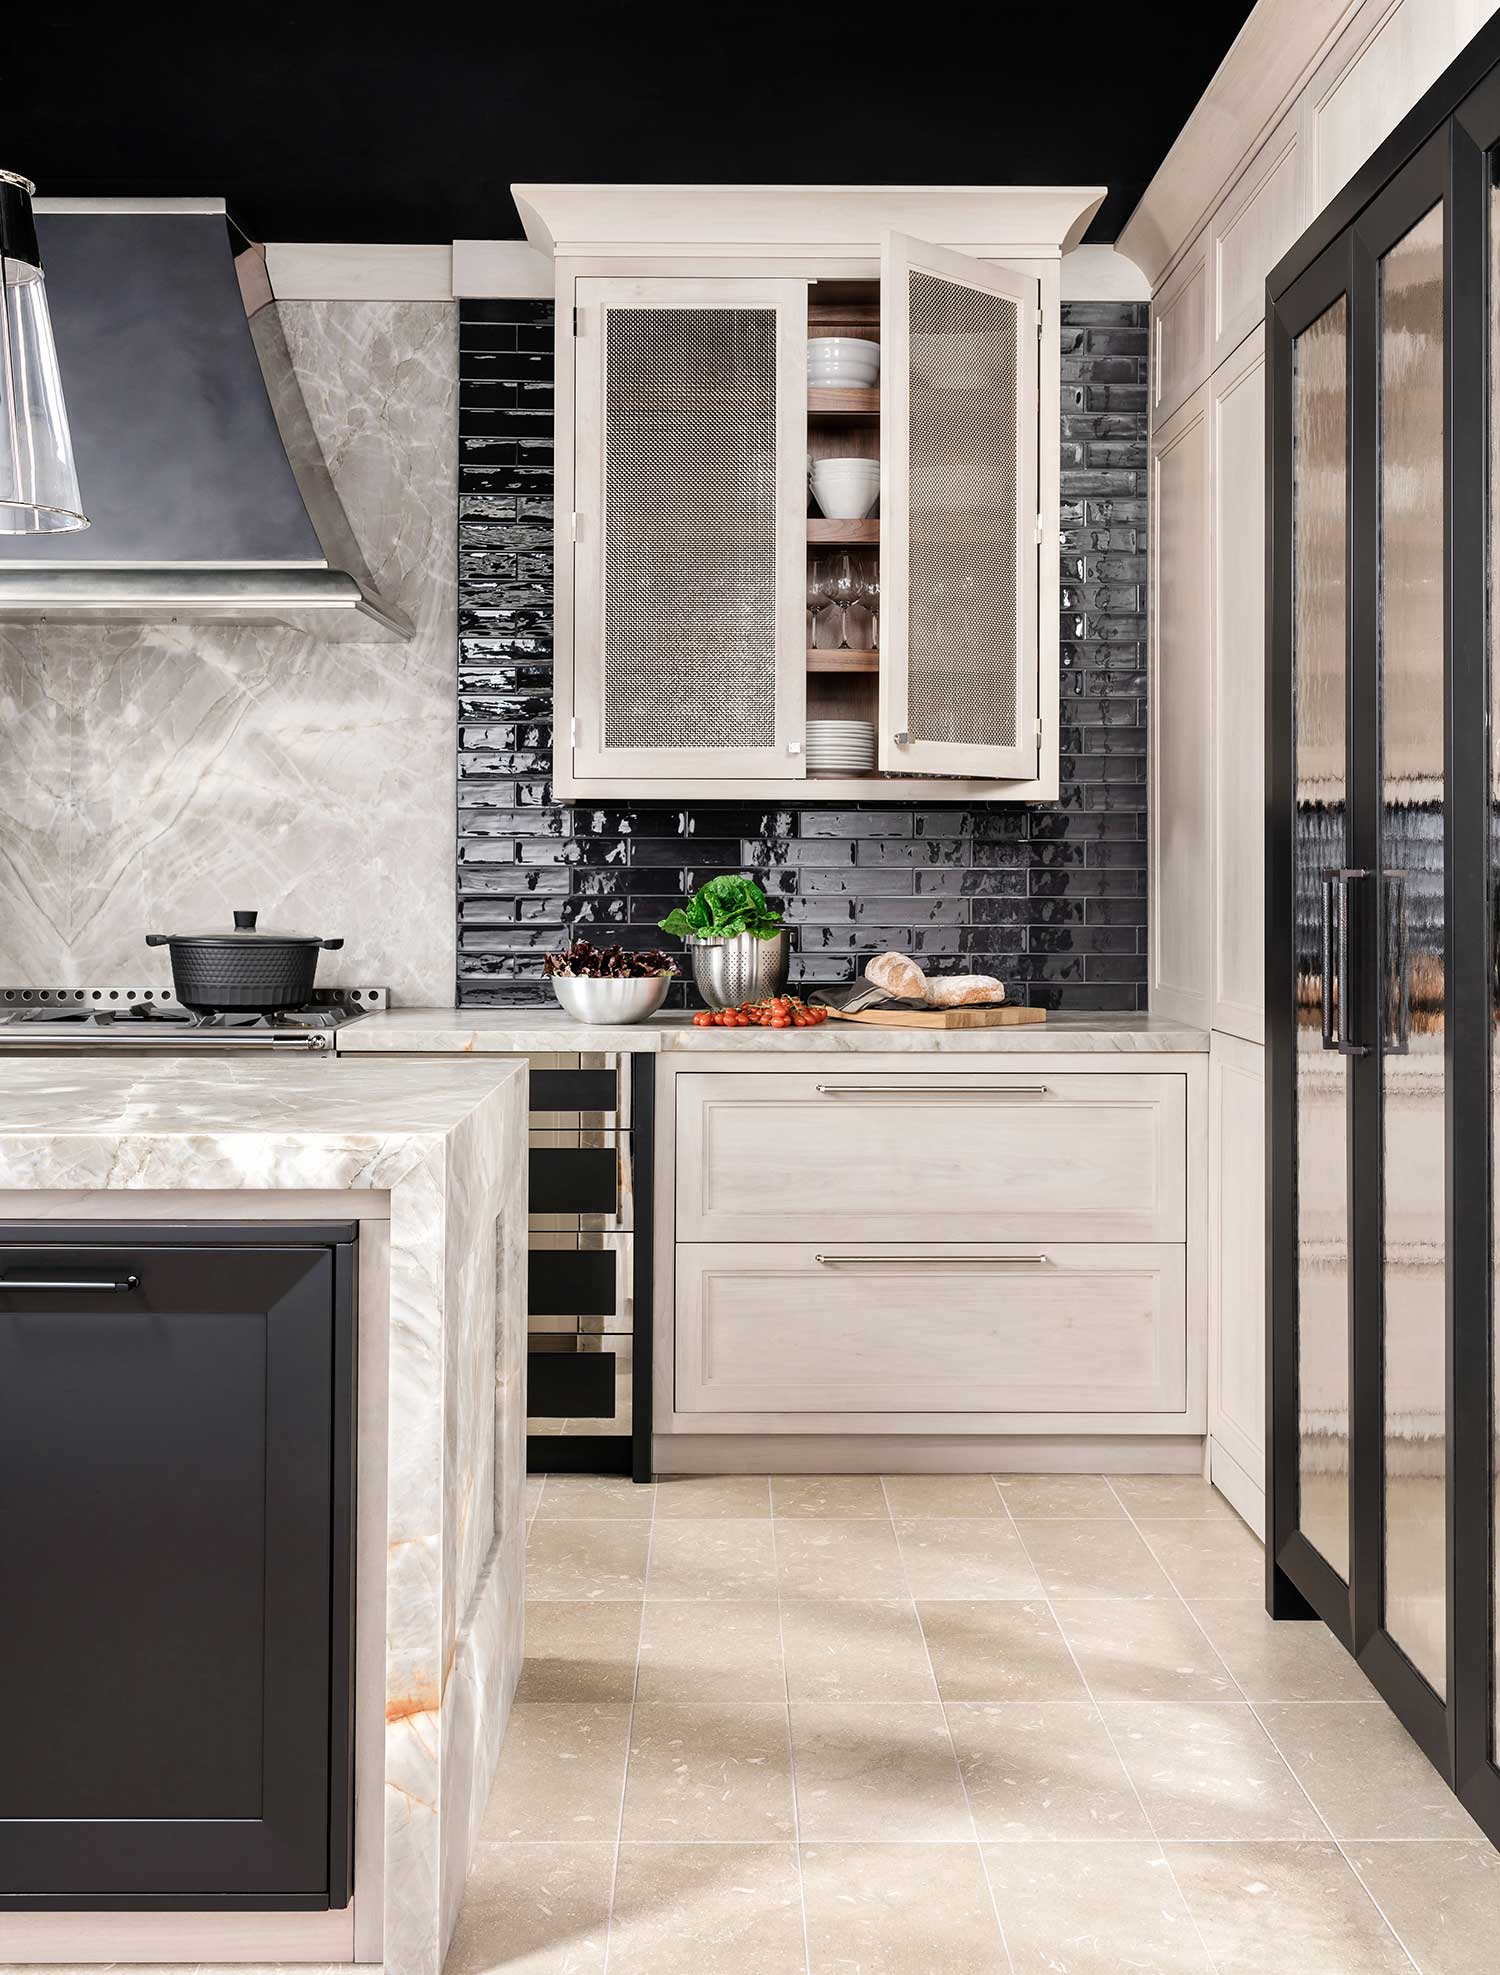 kitchen vignette with black glazed tile backsplash, white cabinetry and white marble countertops